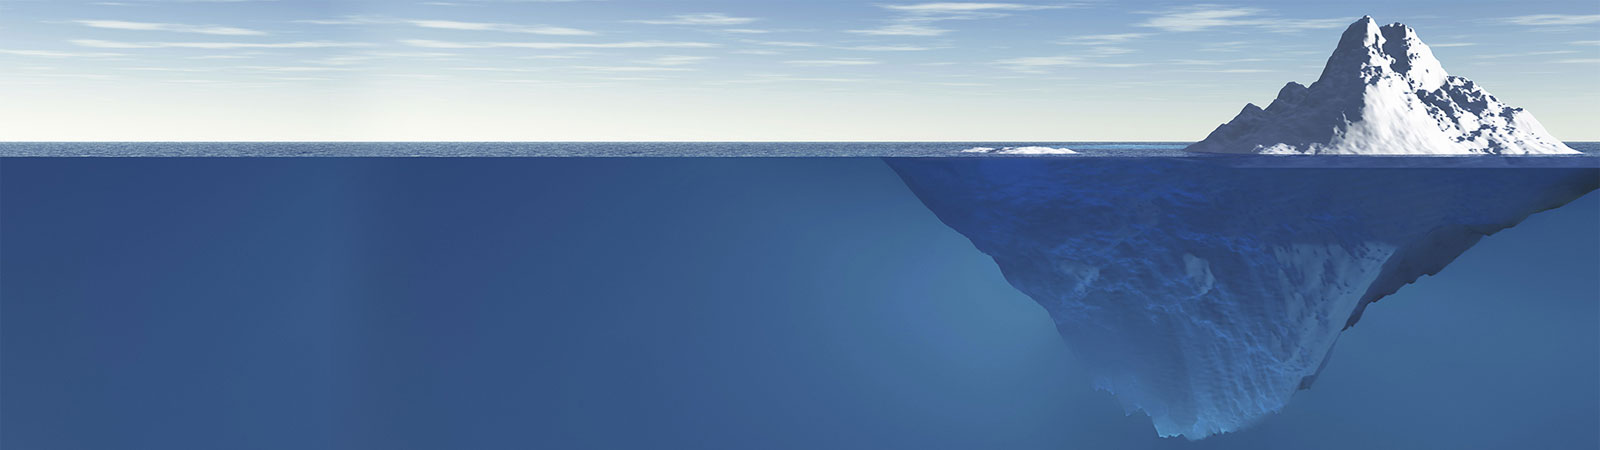 big data iceberg2